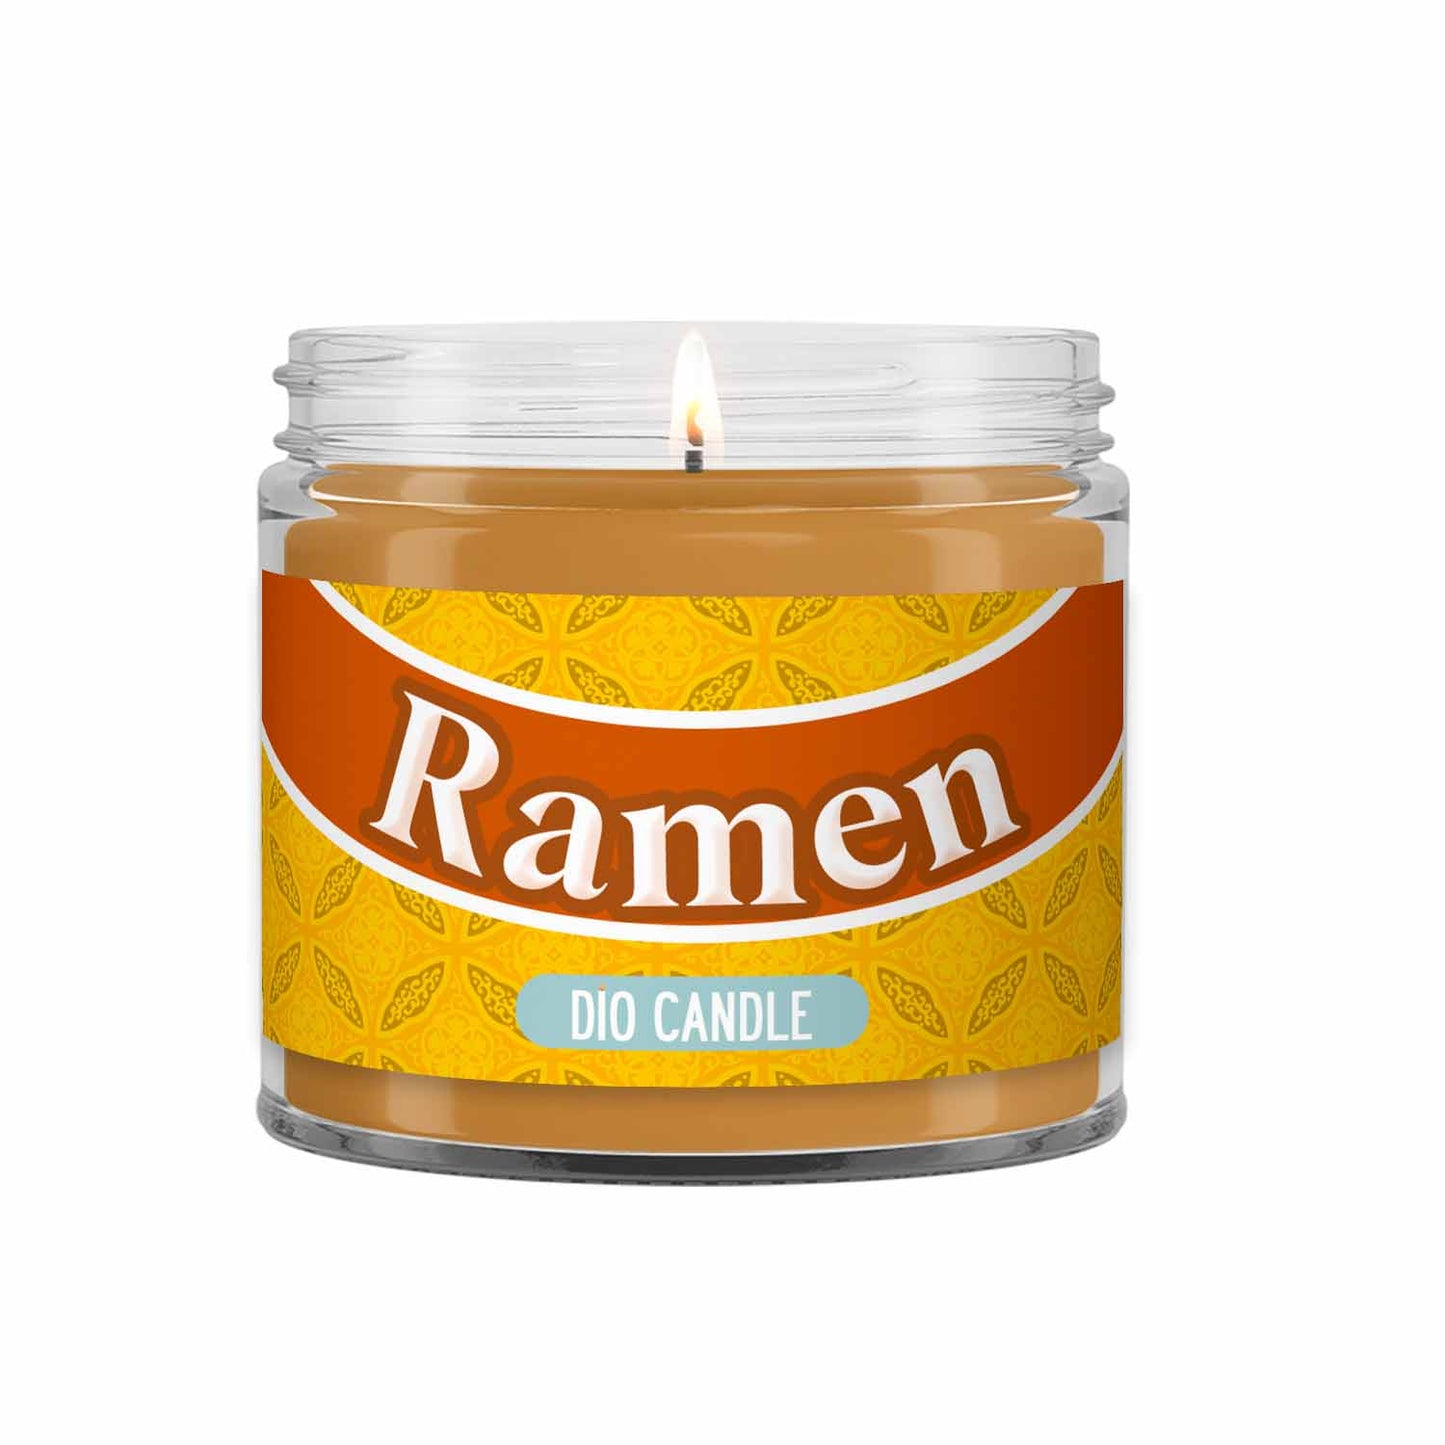 Ramen Candle